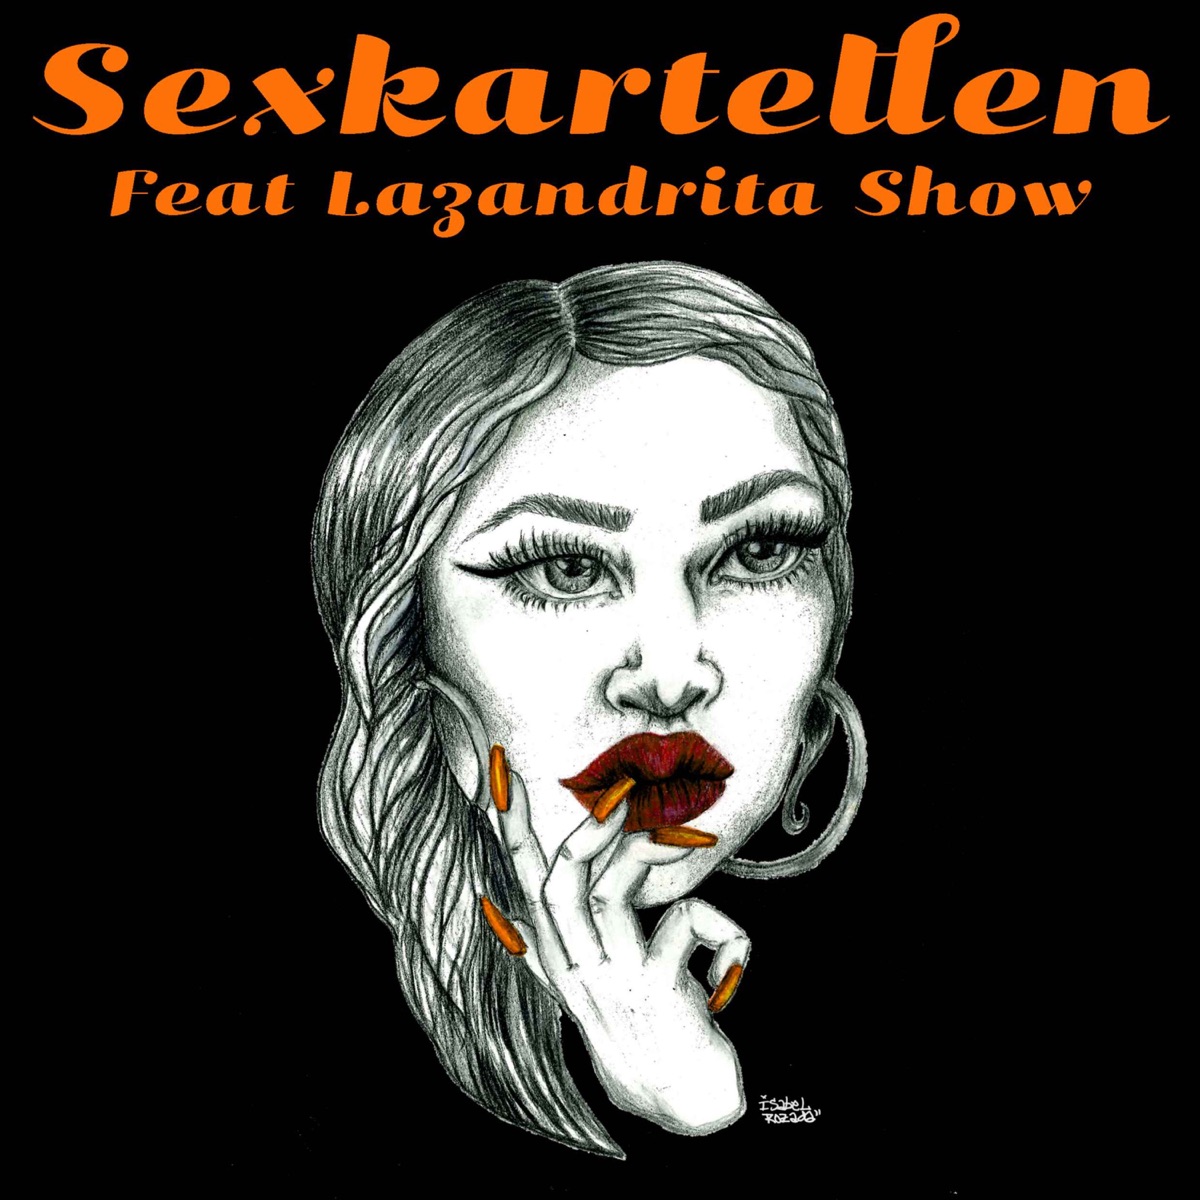 Sexkartellen feat Lazandrita Show – Lyssna här